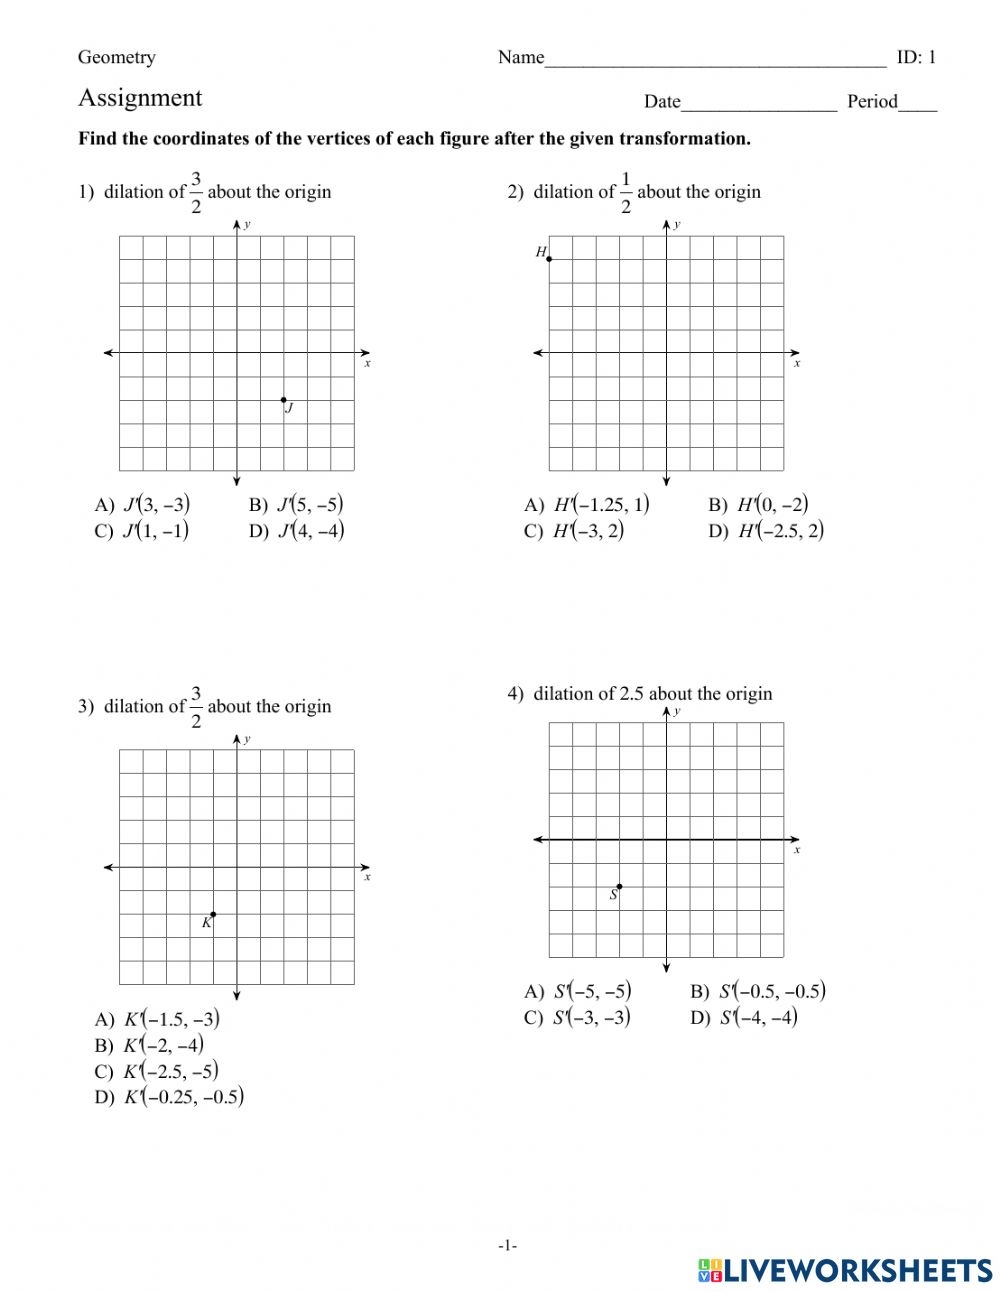 dilations-of-geometric-figures-worksheet-math-worksheet-answers